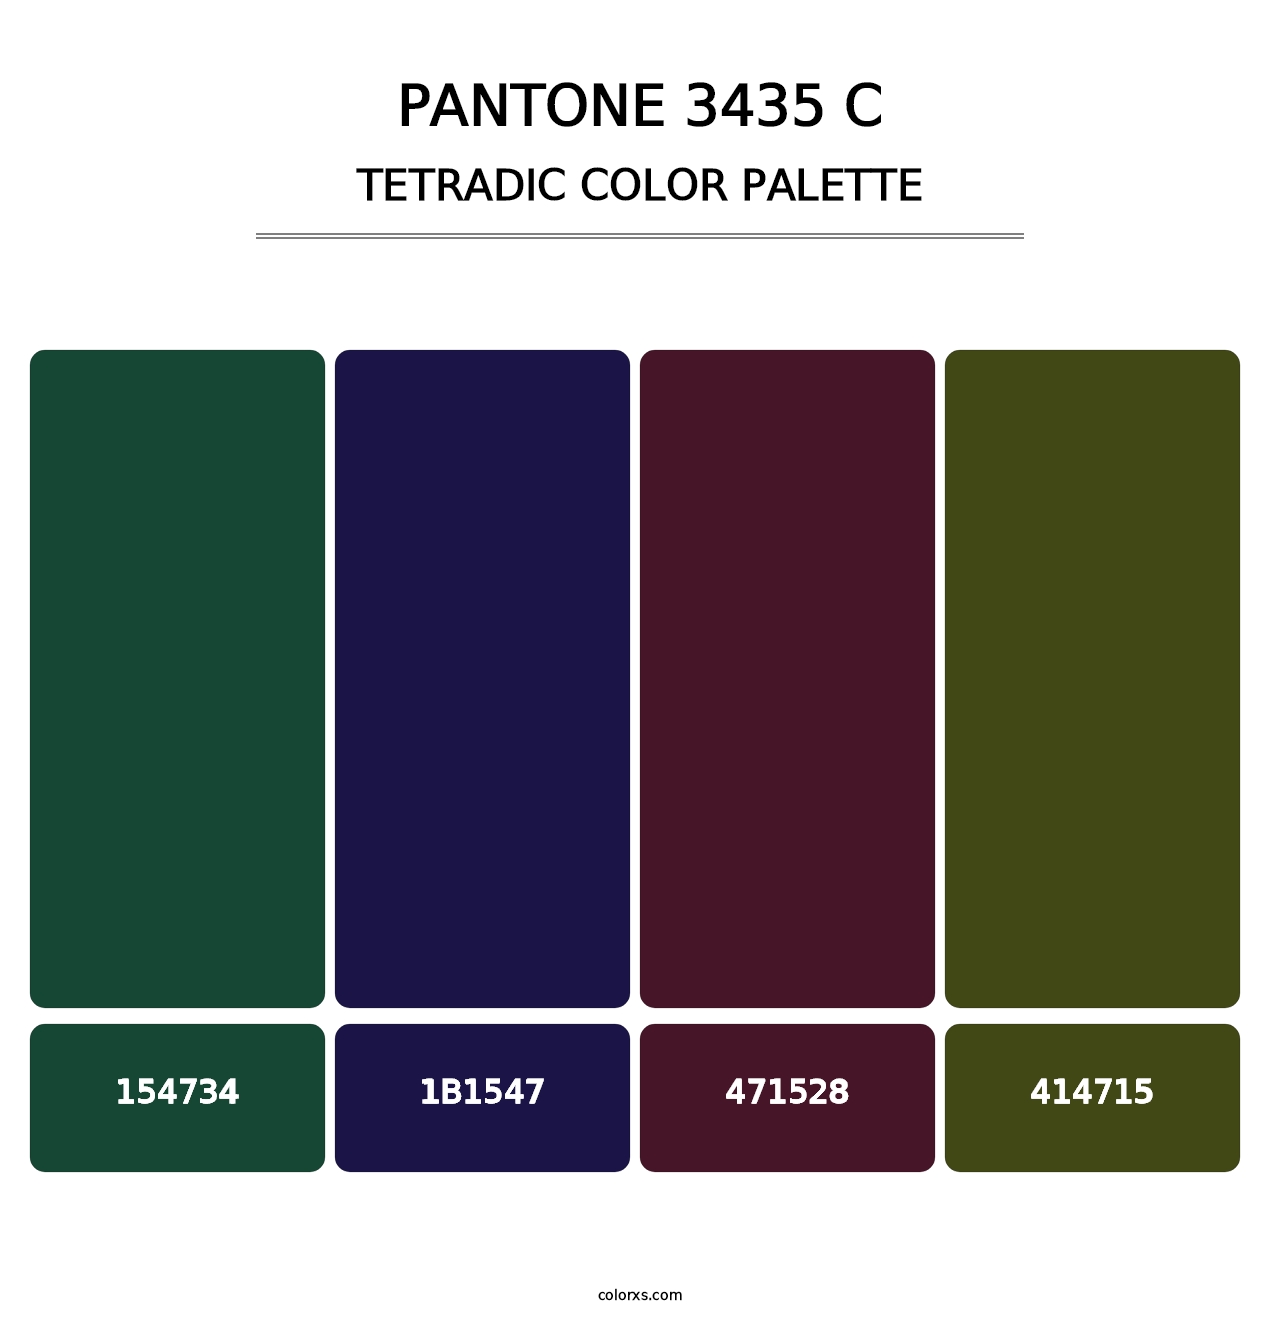 PANTONE 3435 C - Tetradic Color Palette